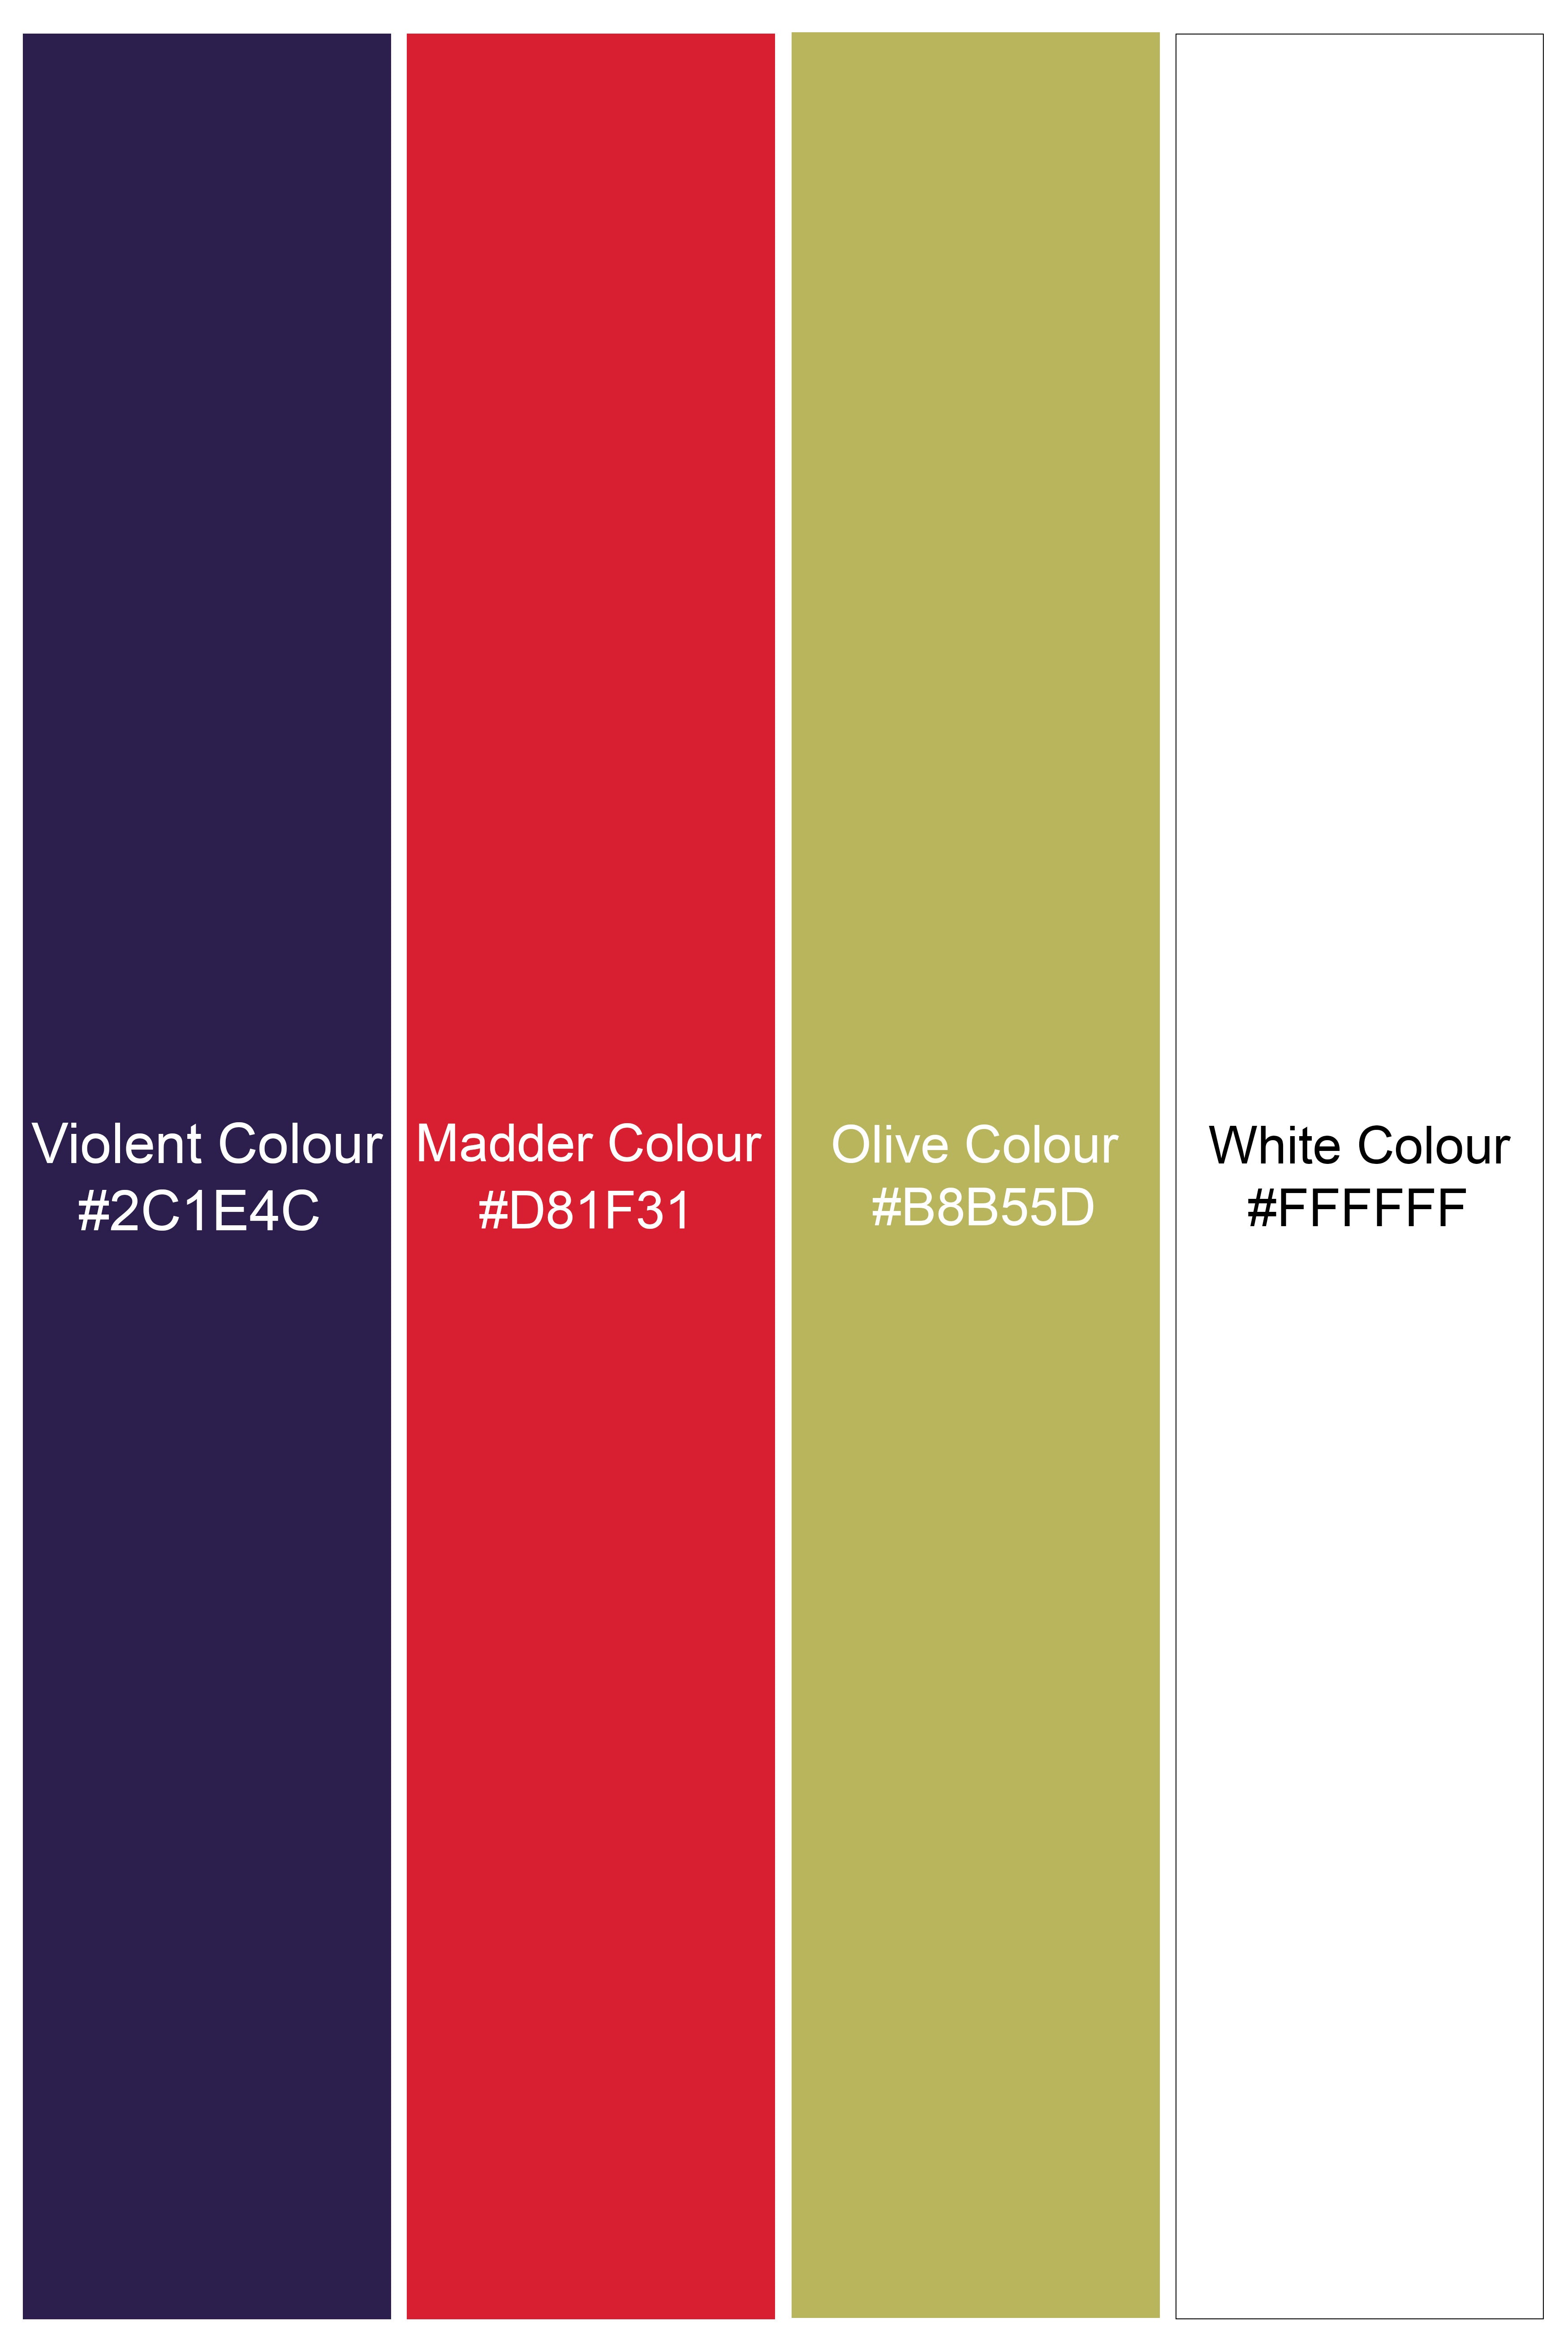 Violent Purple and Madder Red Multicolour Paisley Printed Subtle Sheen Super soft Premium Cotton Shirt 11763-38, 11763-H-38, 11763-39, 11763-H-39, 11763-40, 11763-H-40, 11763-42, 11763-H-42, 11763-44, 11763-H-44, 11763-46, 11763-H-46, 11763-48, 11763-H-48, 11763-50, 11763-H-50, 11763-52, 11763-H-52